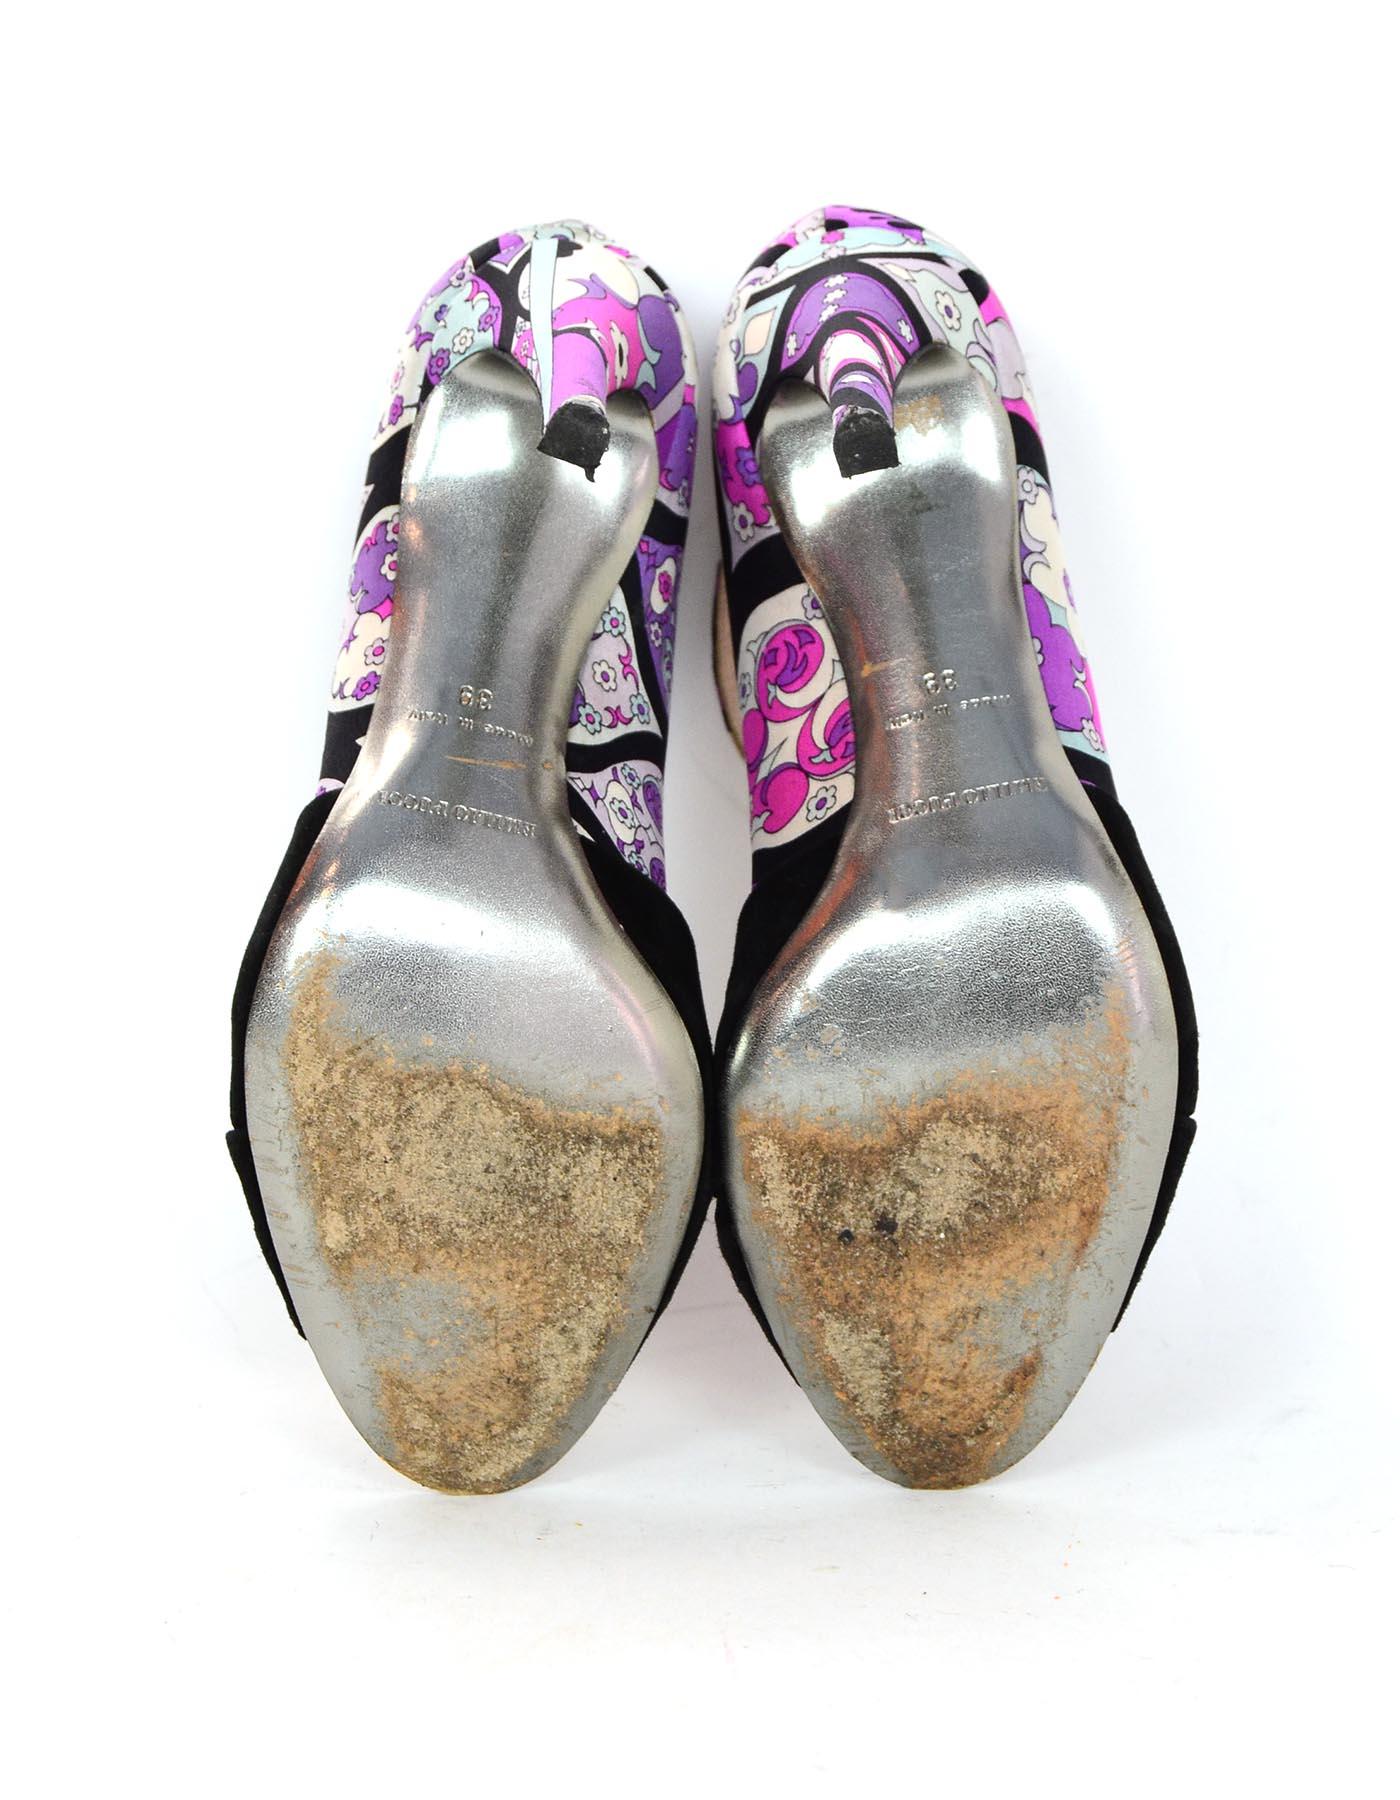 Emilio Pucci Printed Fabric Heels Shoes W/ Black Suede Sz 39 1